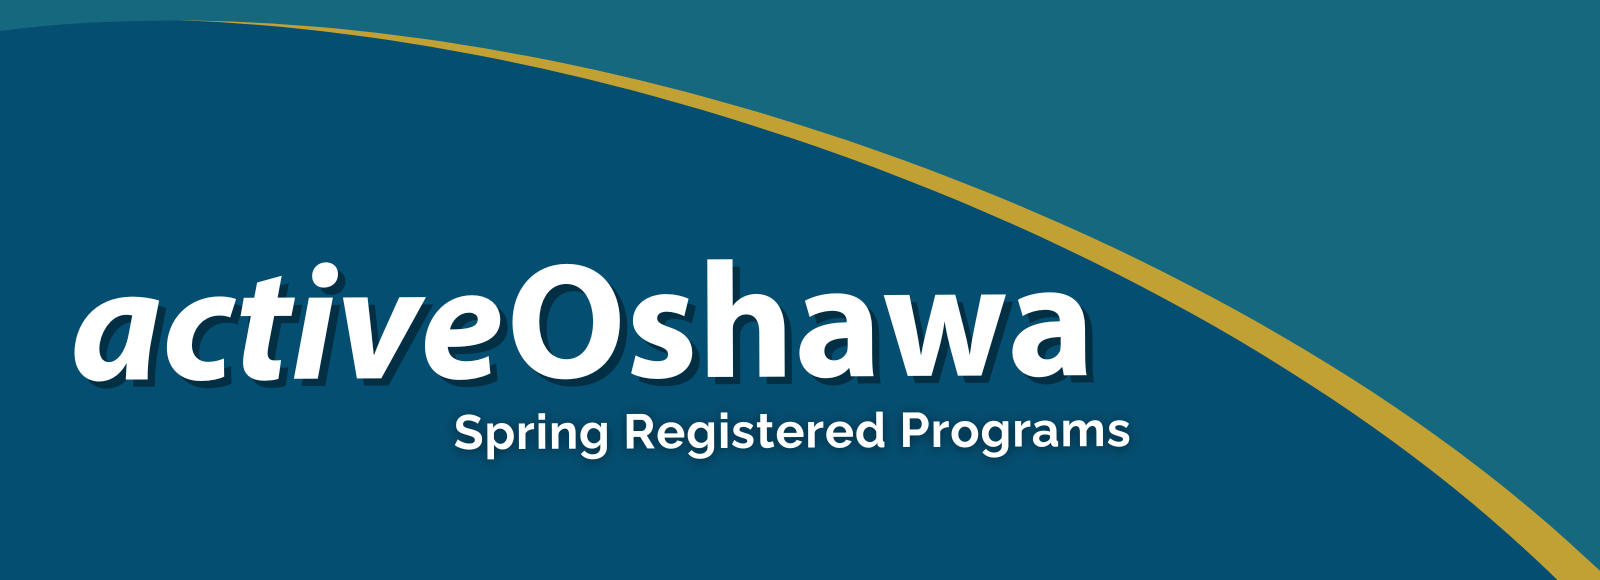 Let’s get ready for spring activeOshawa registration, Oshawa!